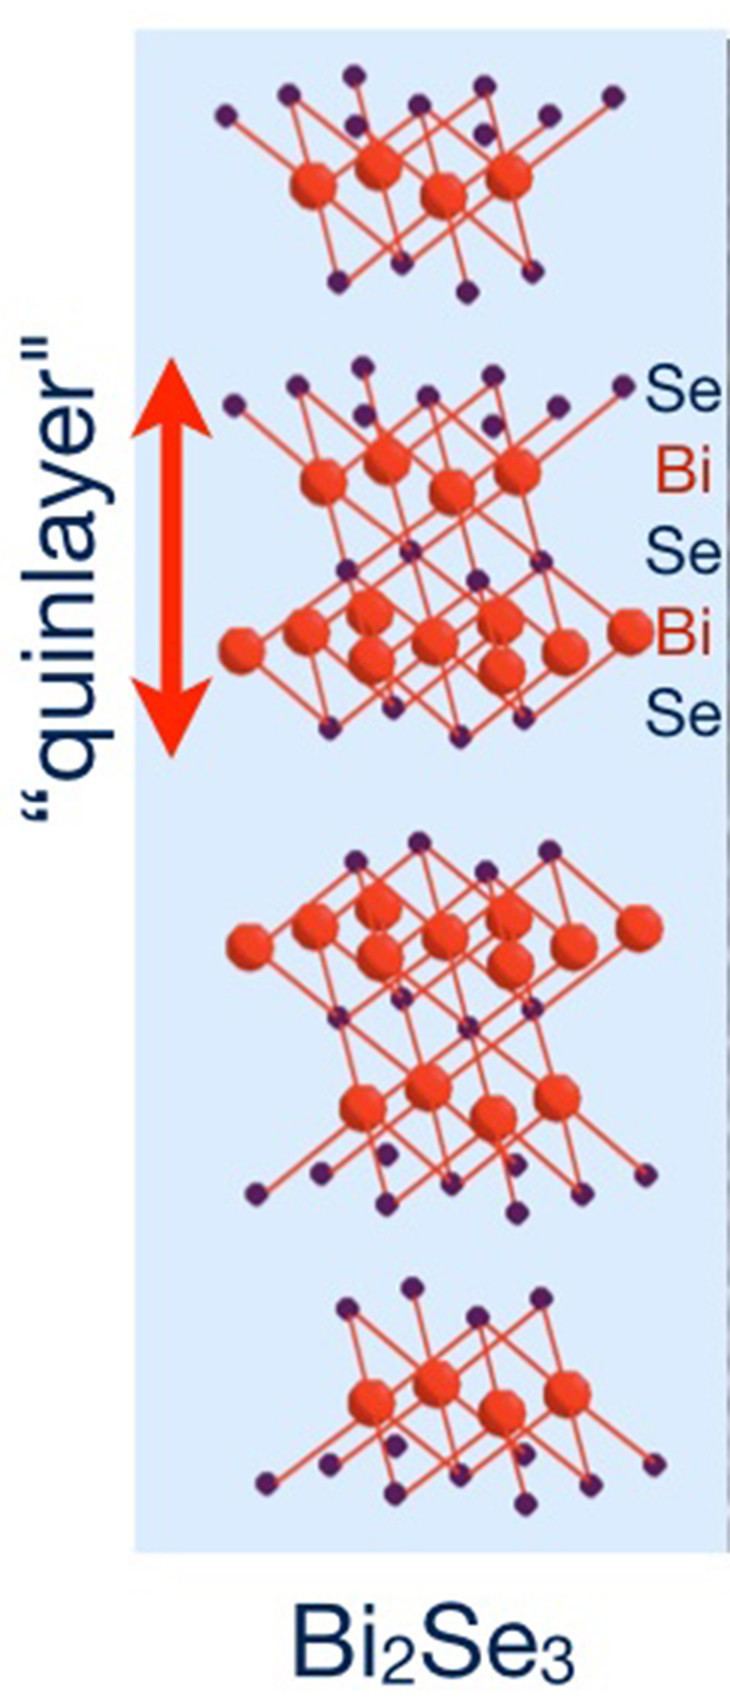 Bismuth selenide Crystal structure of the topological insulator bismuth selenide